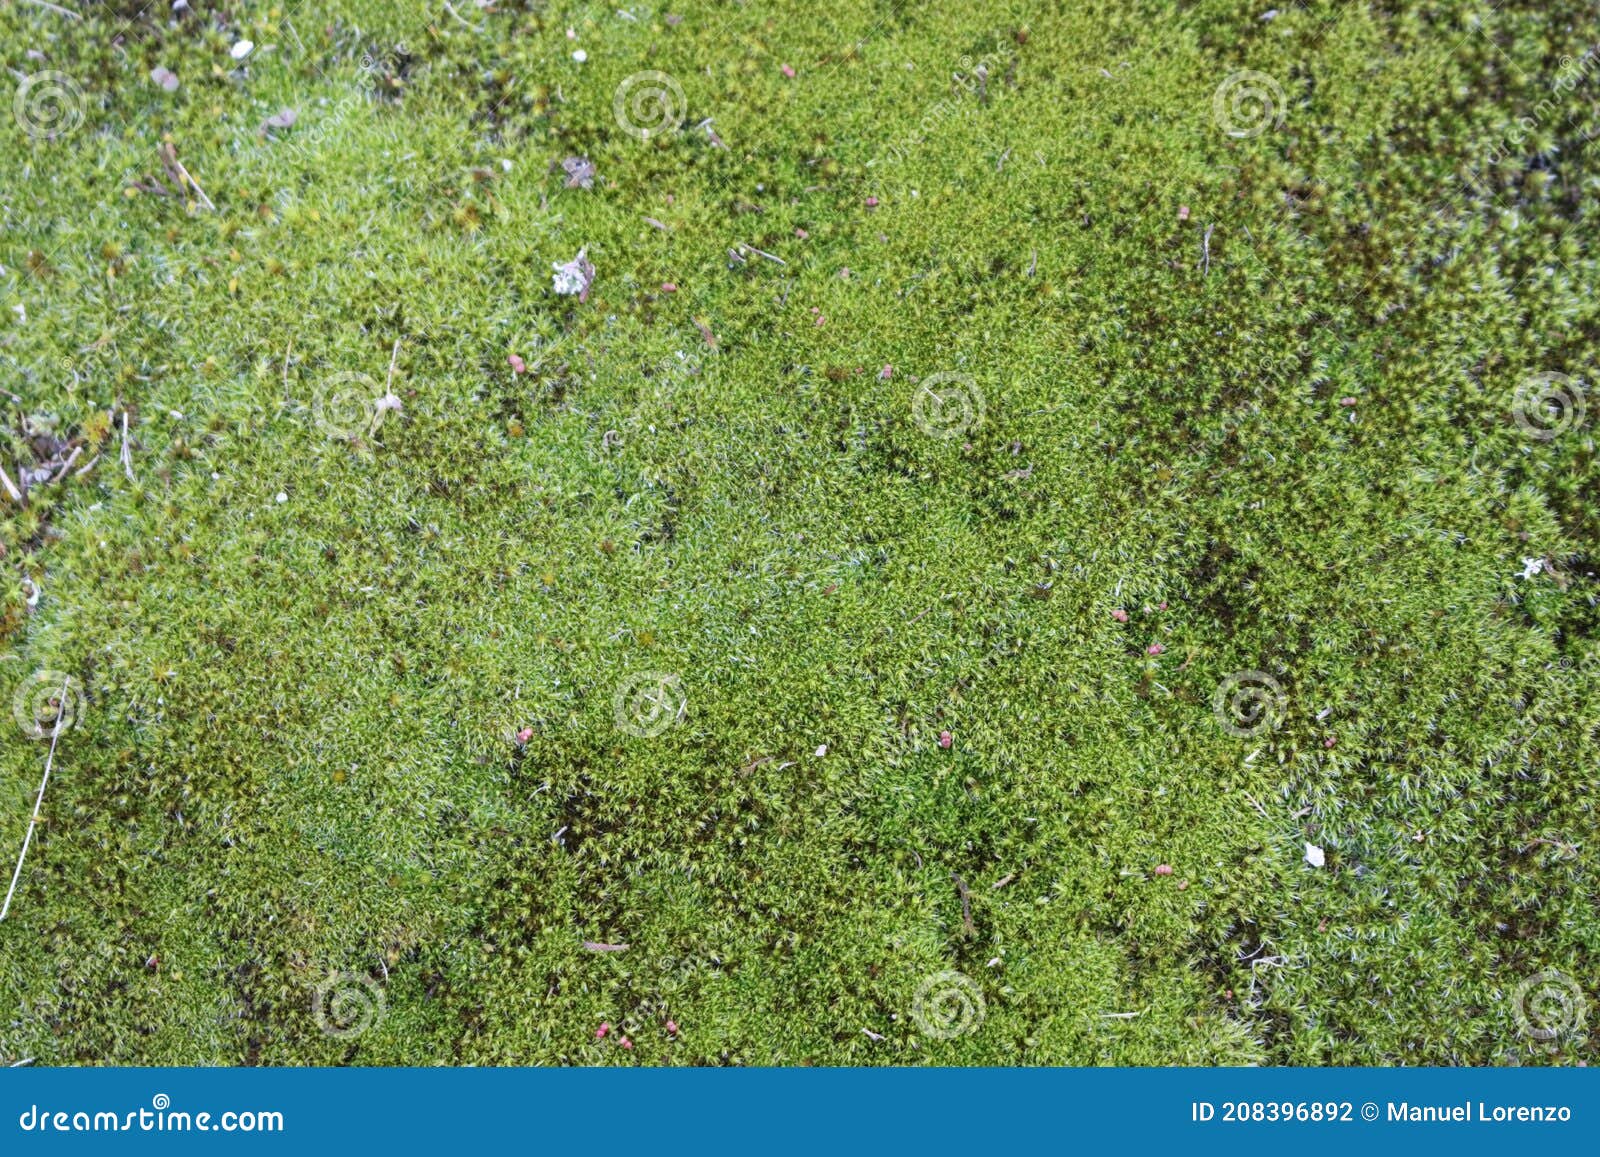 beautiful natural moss fresh soft boiling green